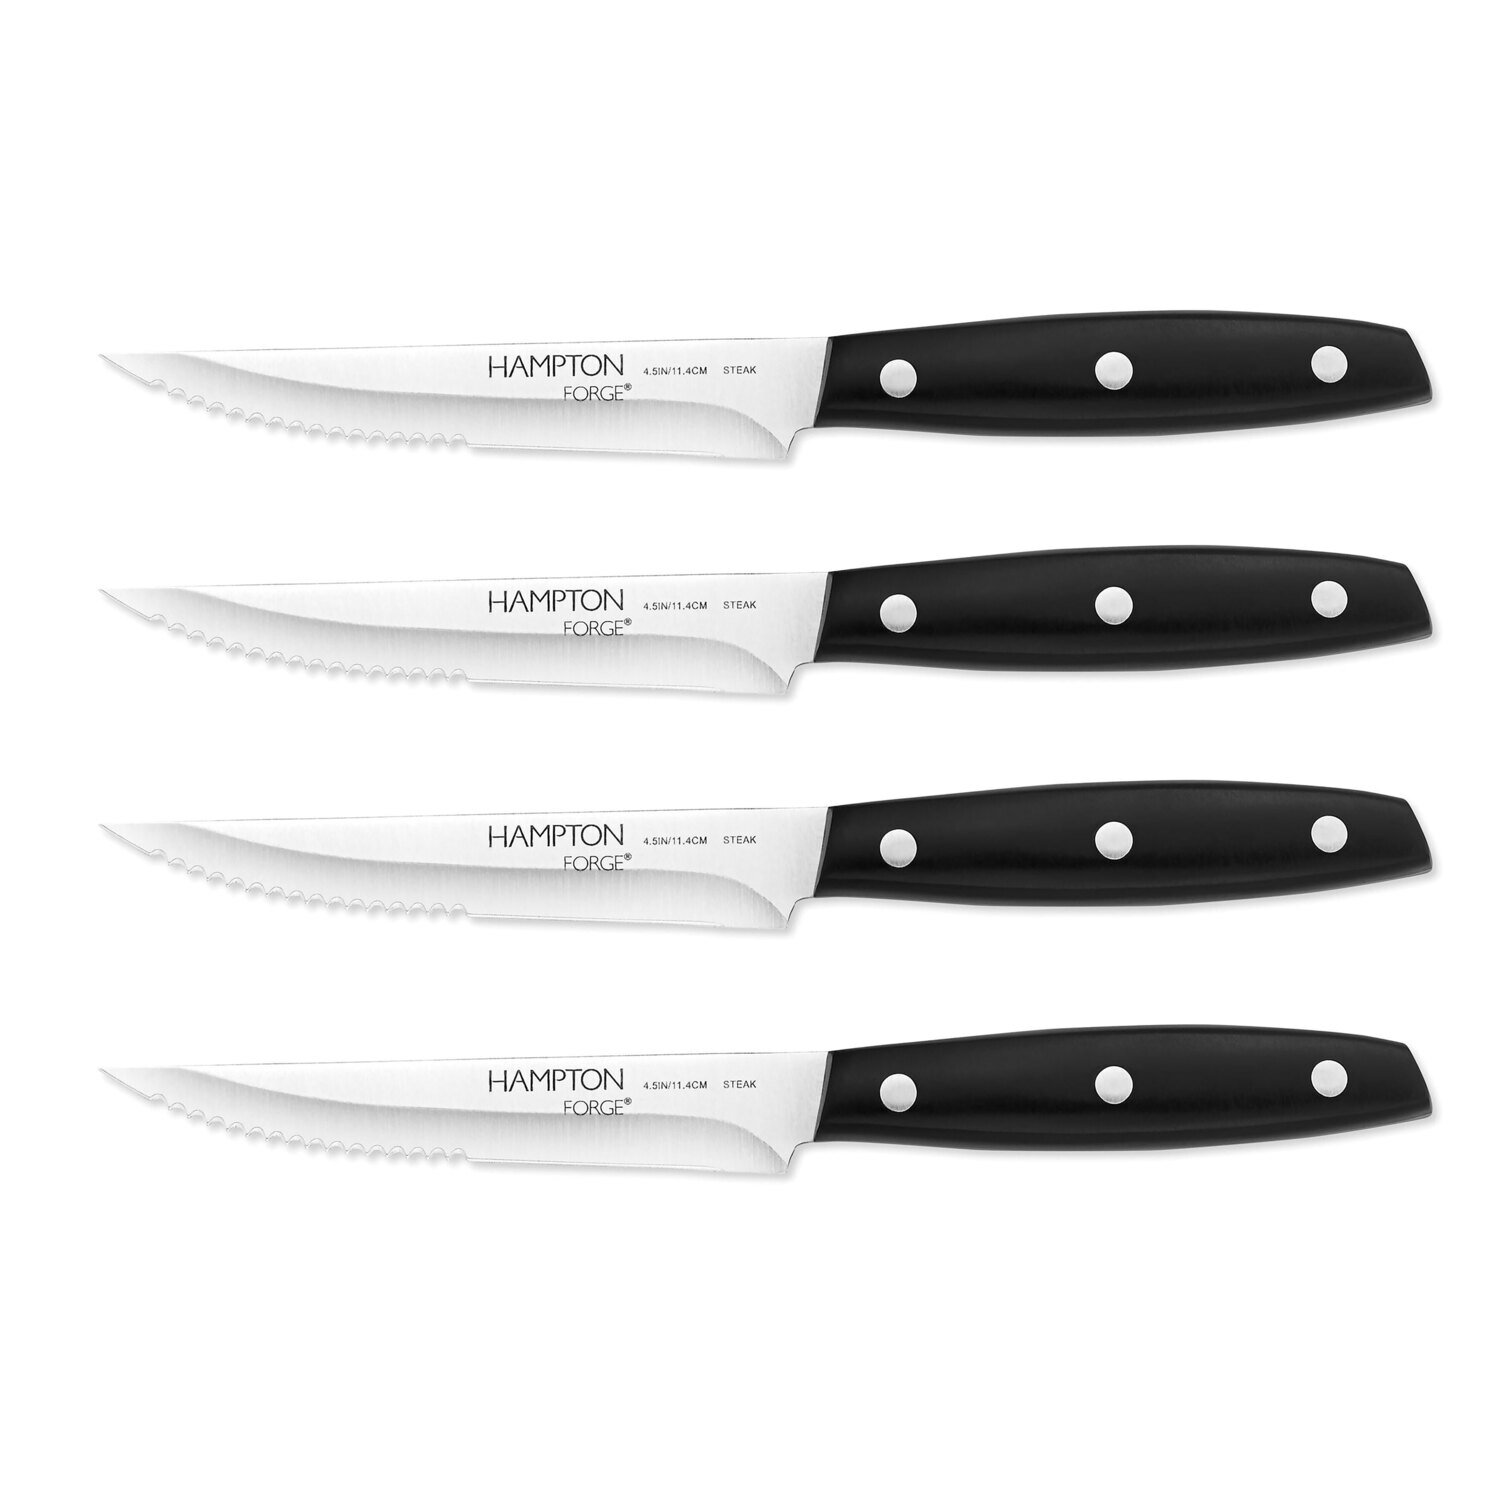 Hampton Forge Mirage Black 4 Piece Steak Knives Set Clampack HMC01A017A